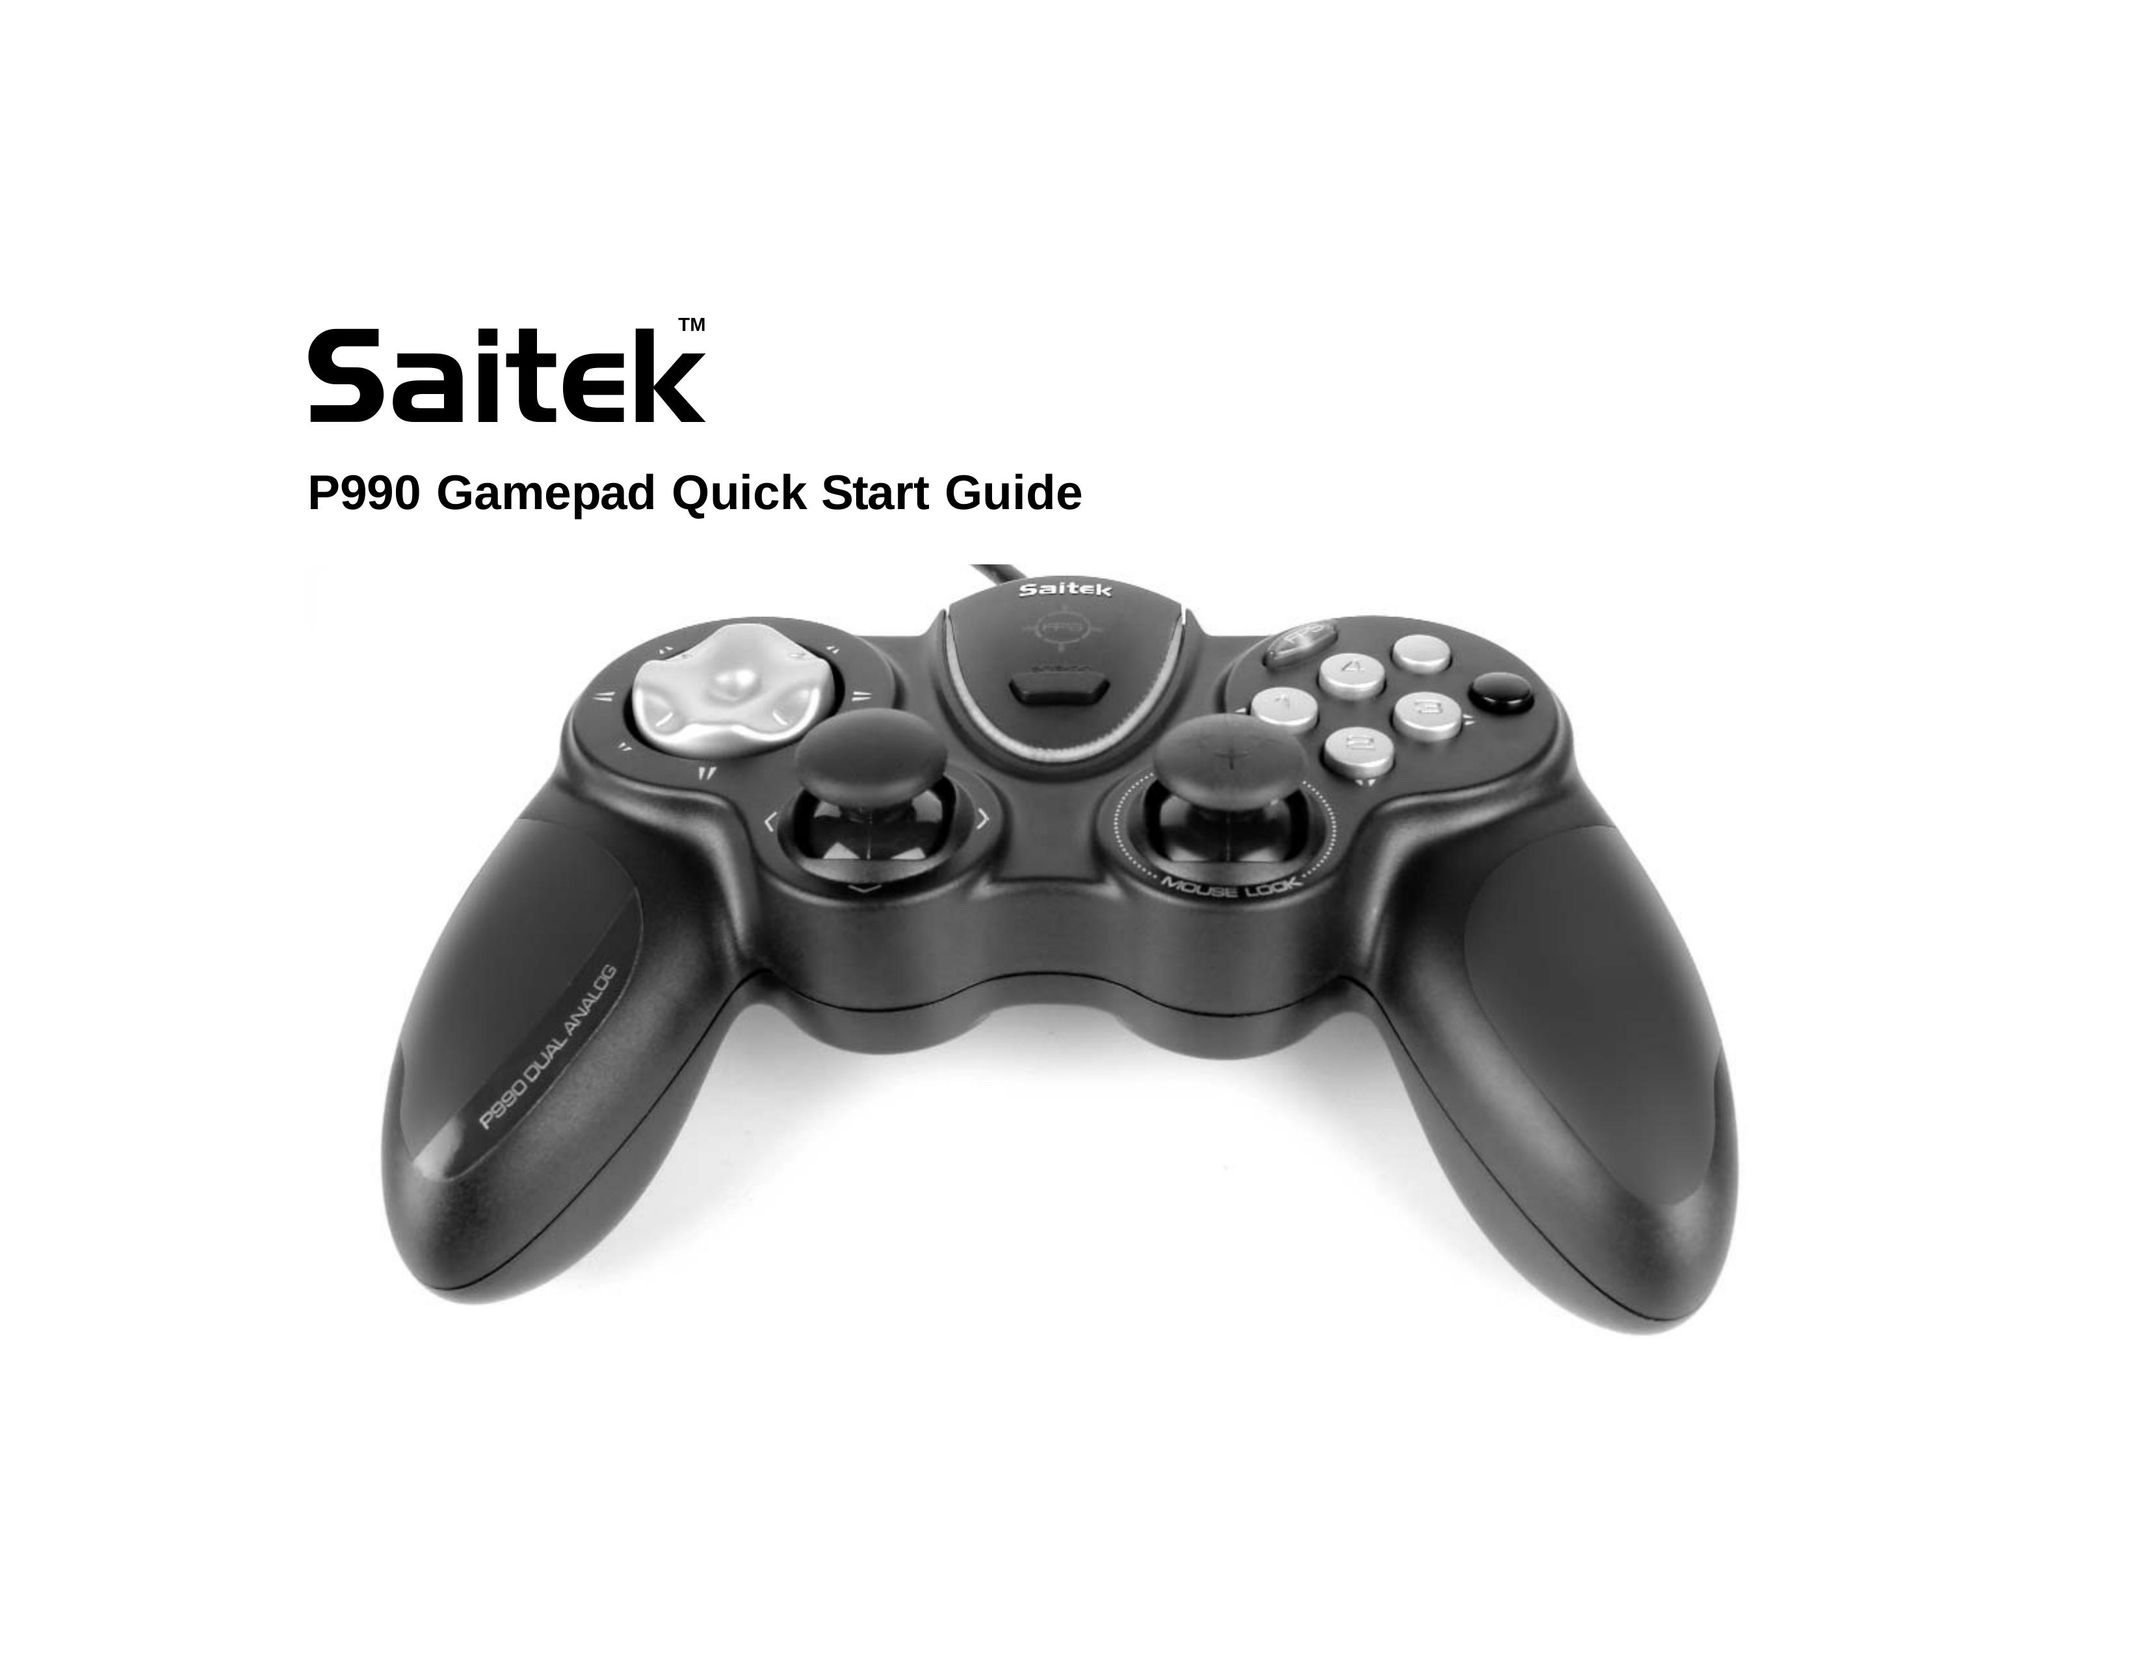 Saitek P990 Video Game Controller User Manual